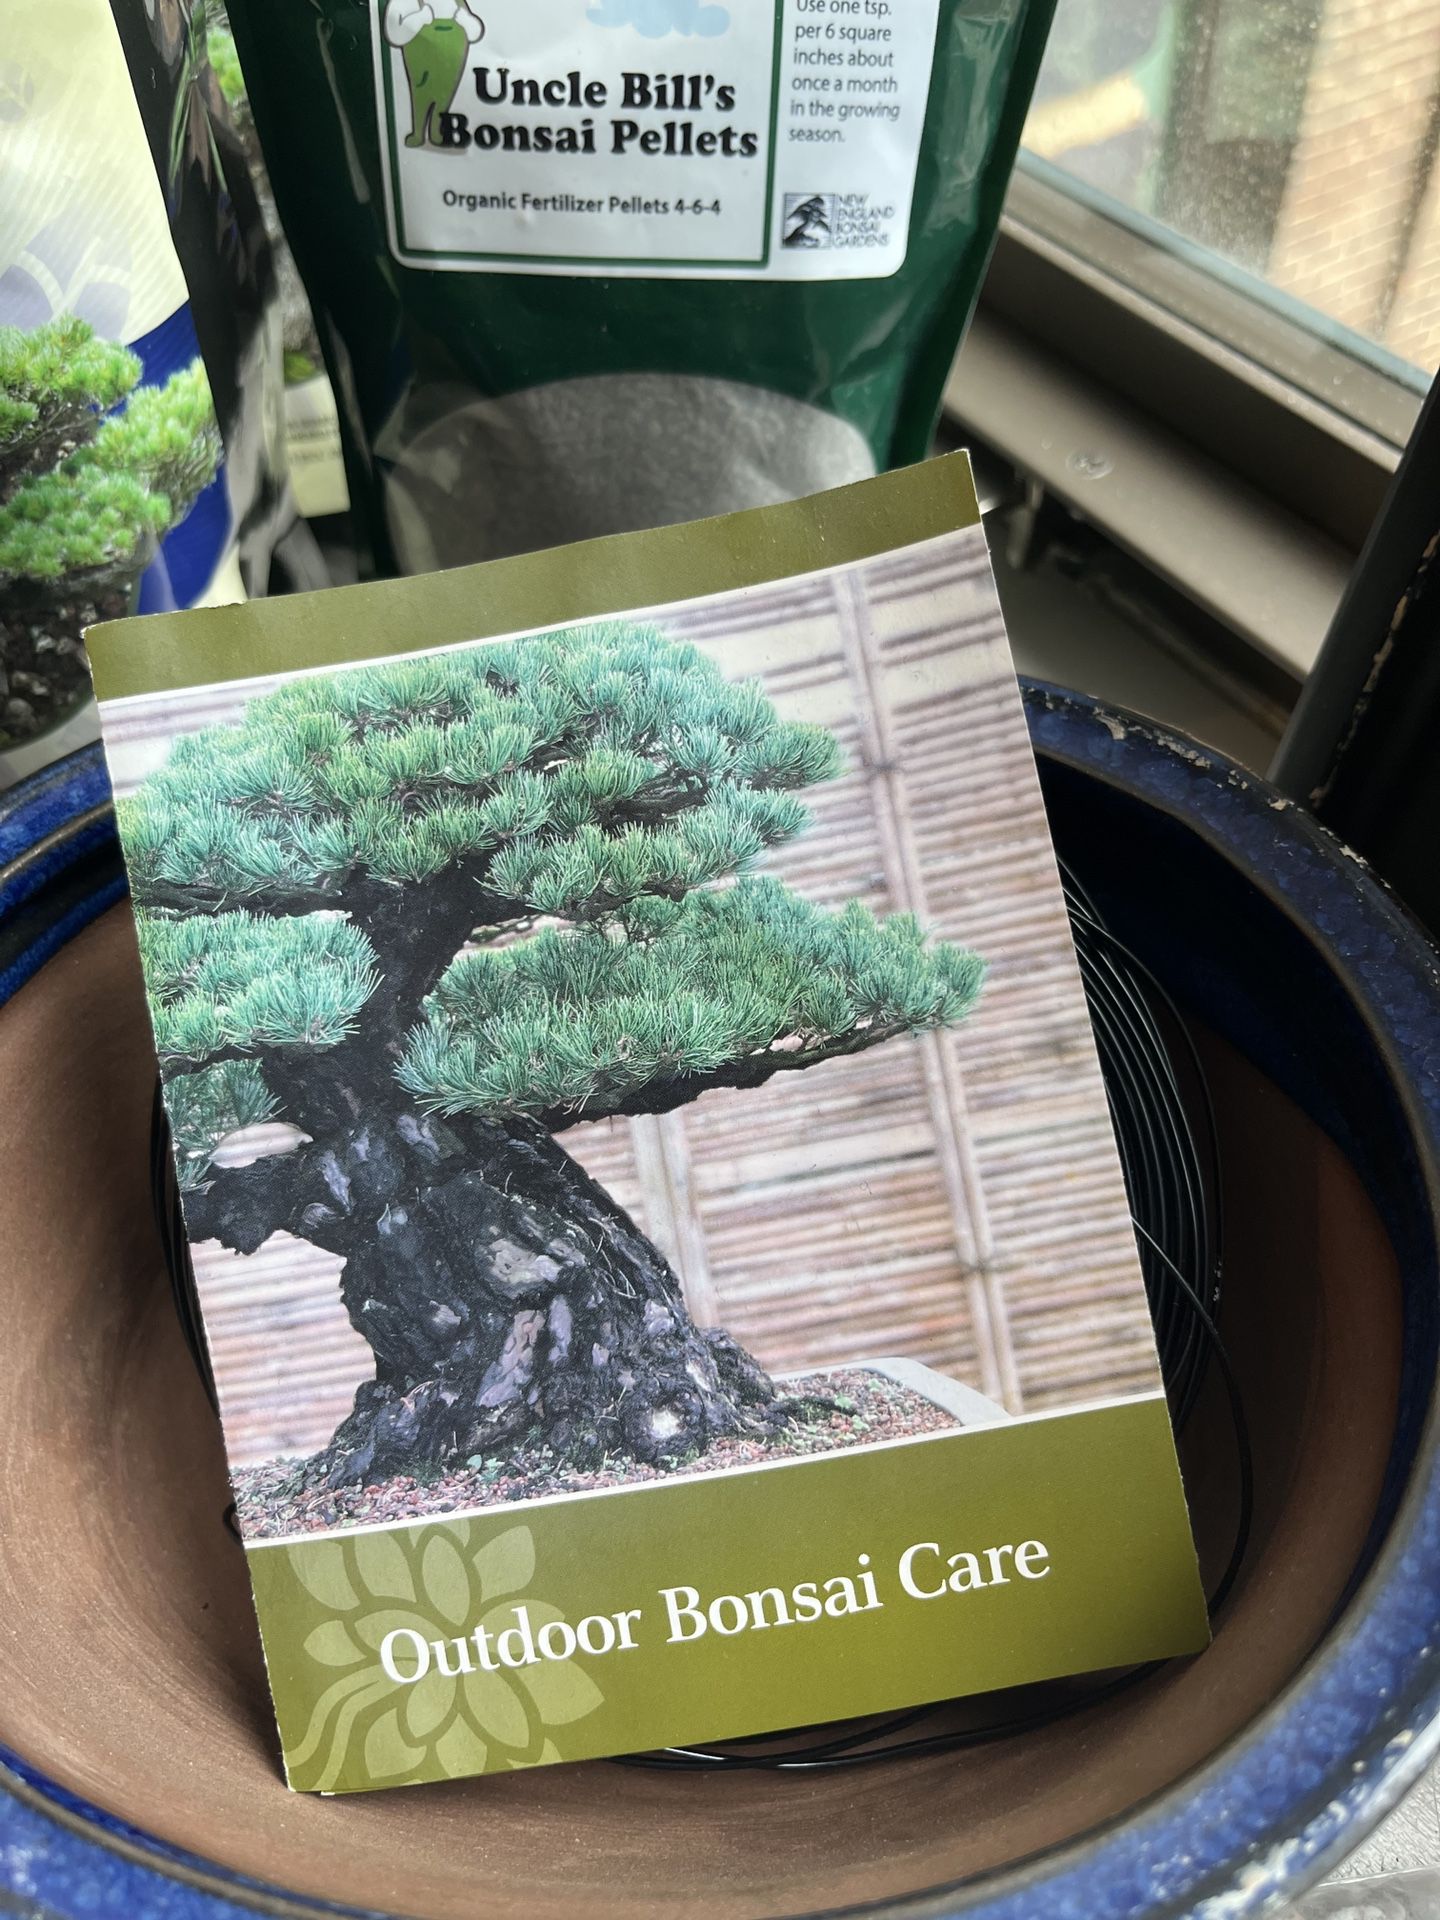 bonsai pruning shears, premium soil, fertilizer pellets, pebbles, wire, pot, tray